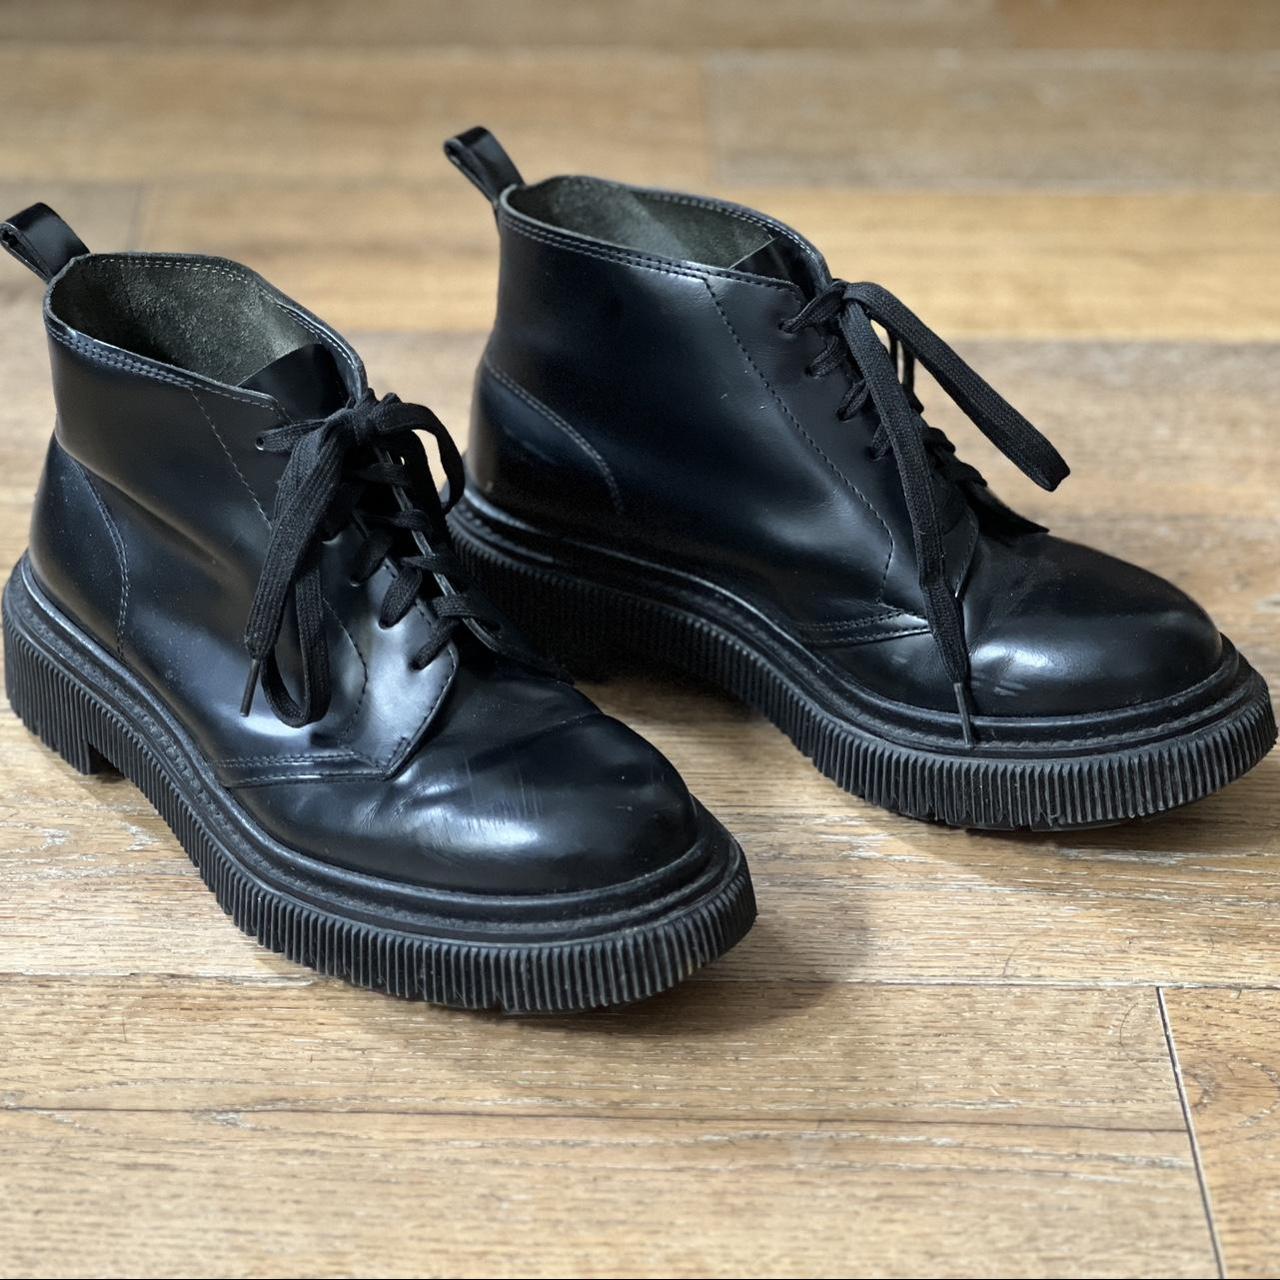 Adieu Women's Black Boots